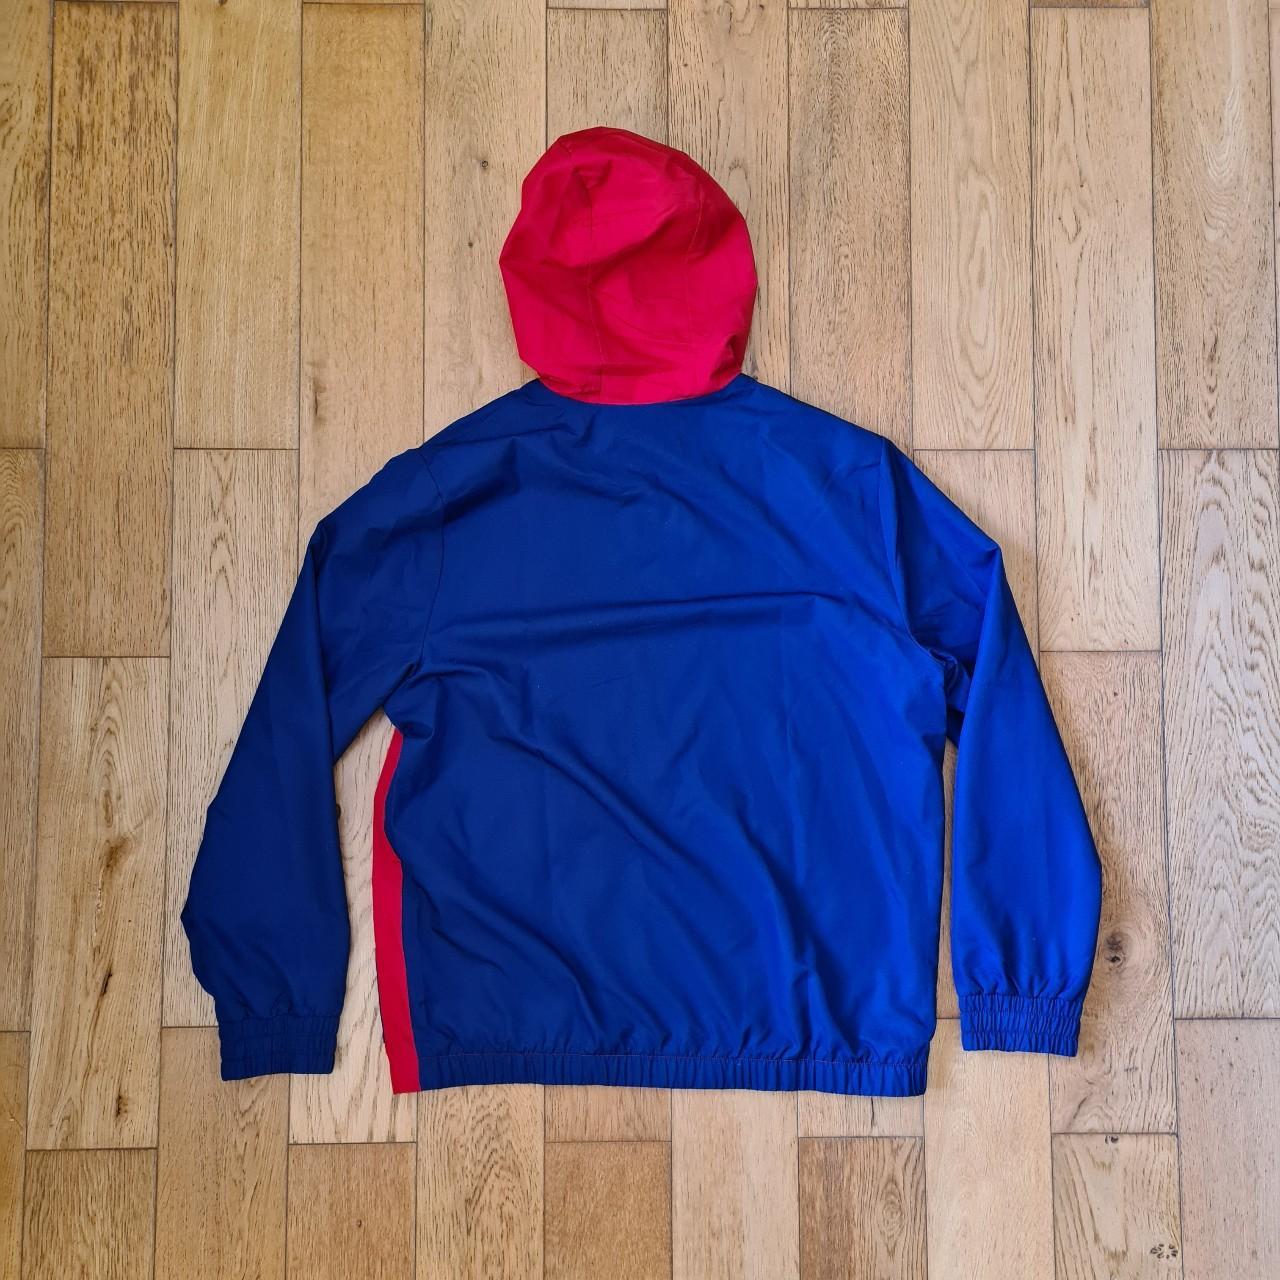 Lacoste Men's Blue and Red Jacket | Depop